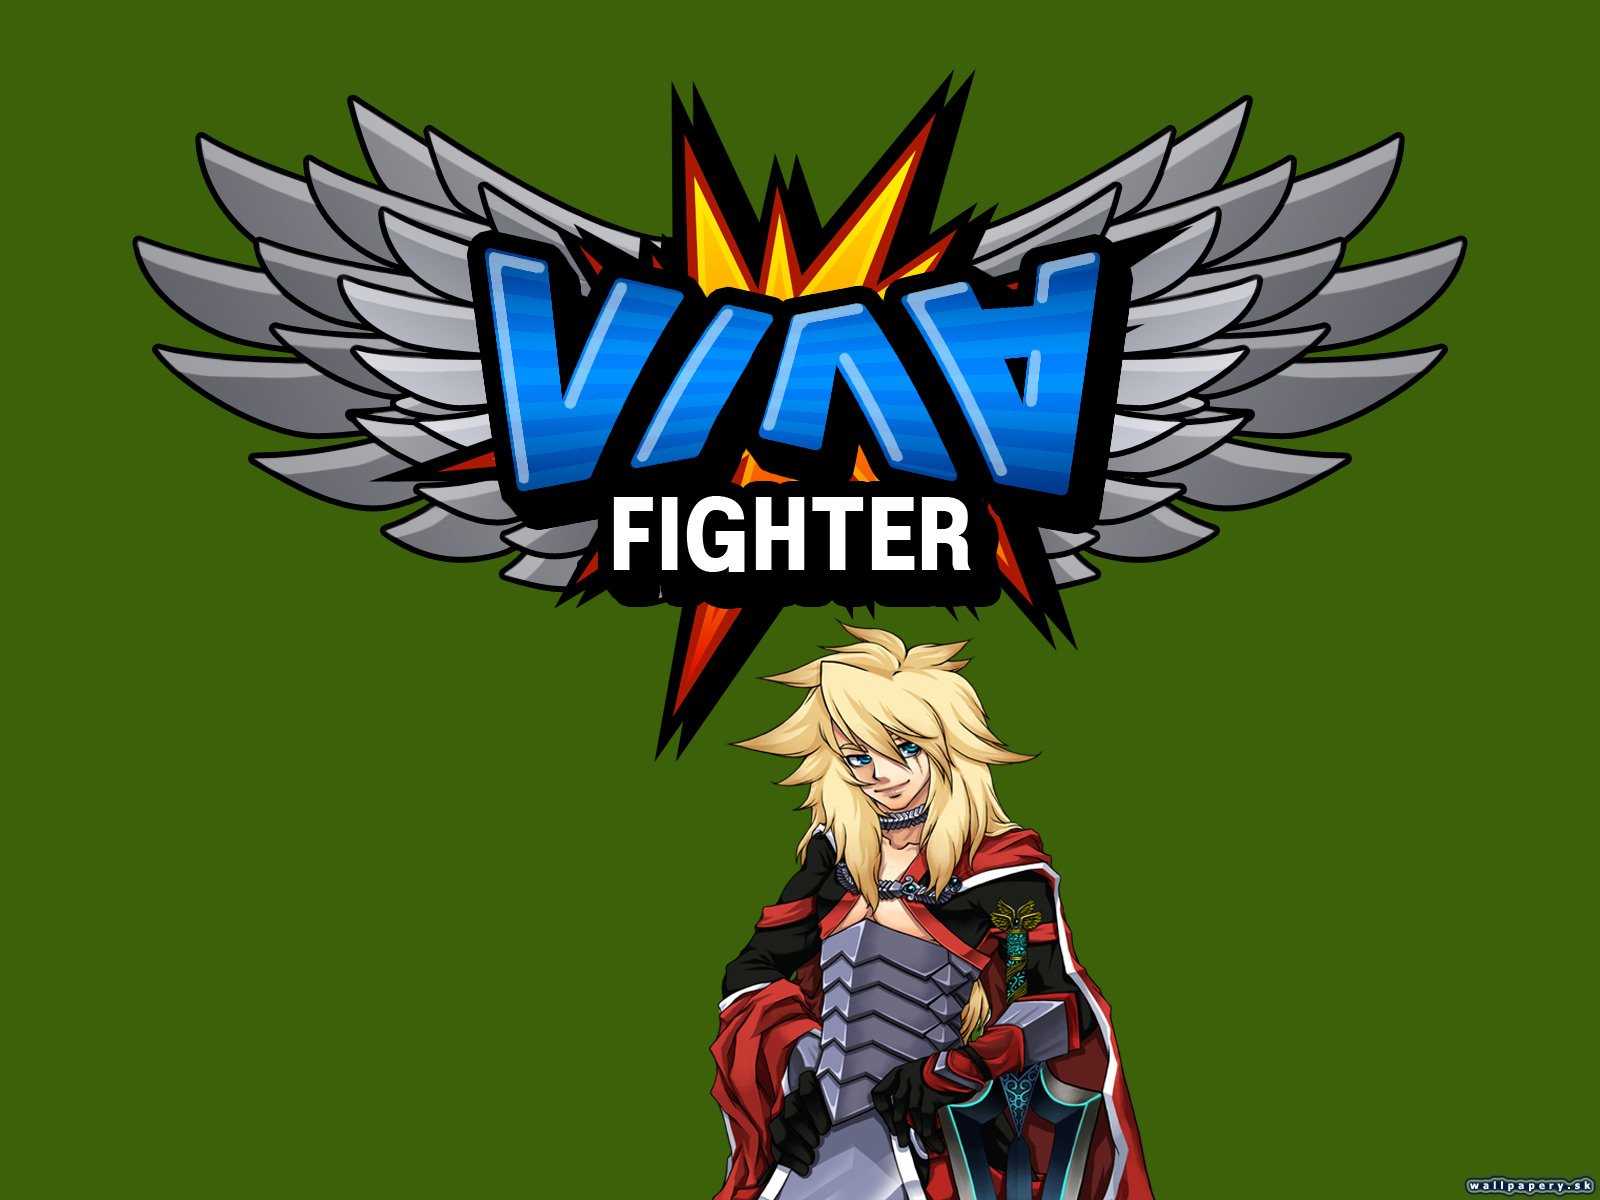 VIVA Fighter - wallpaper 6